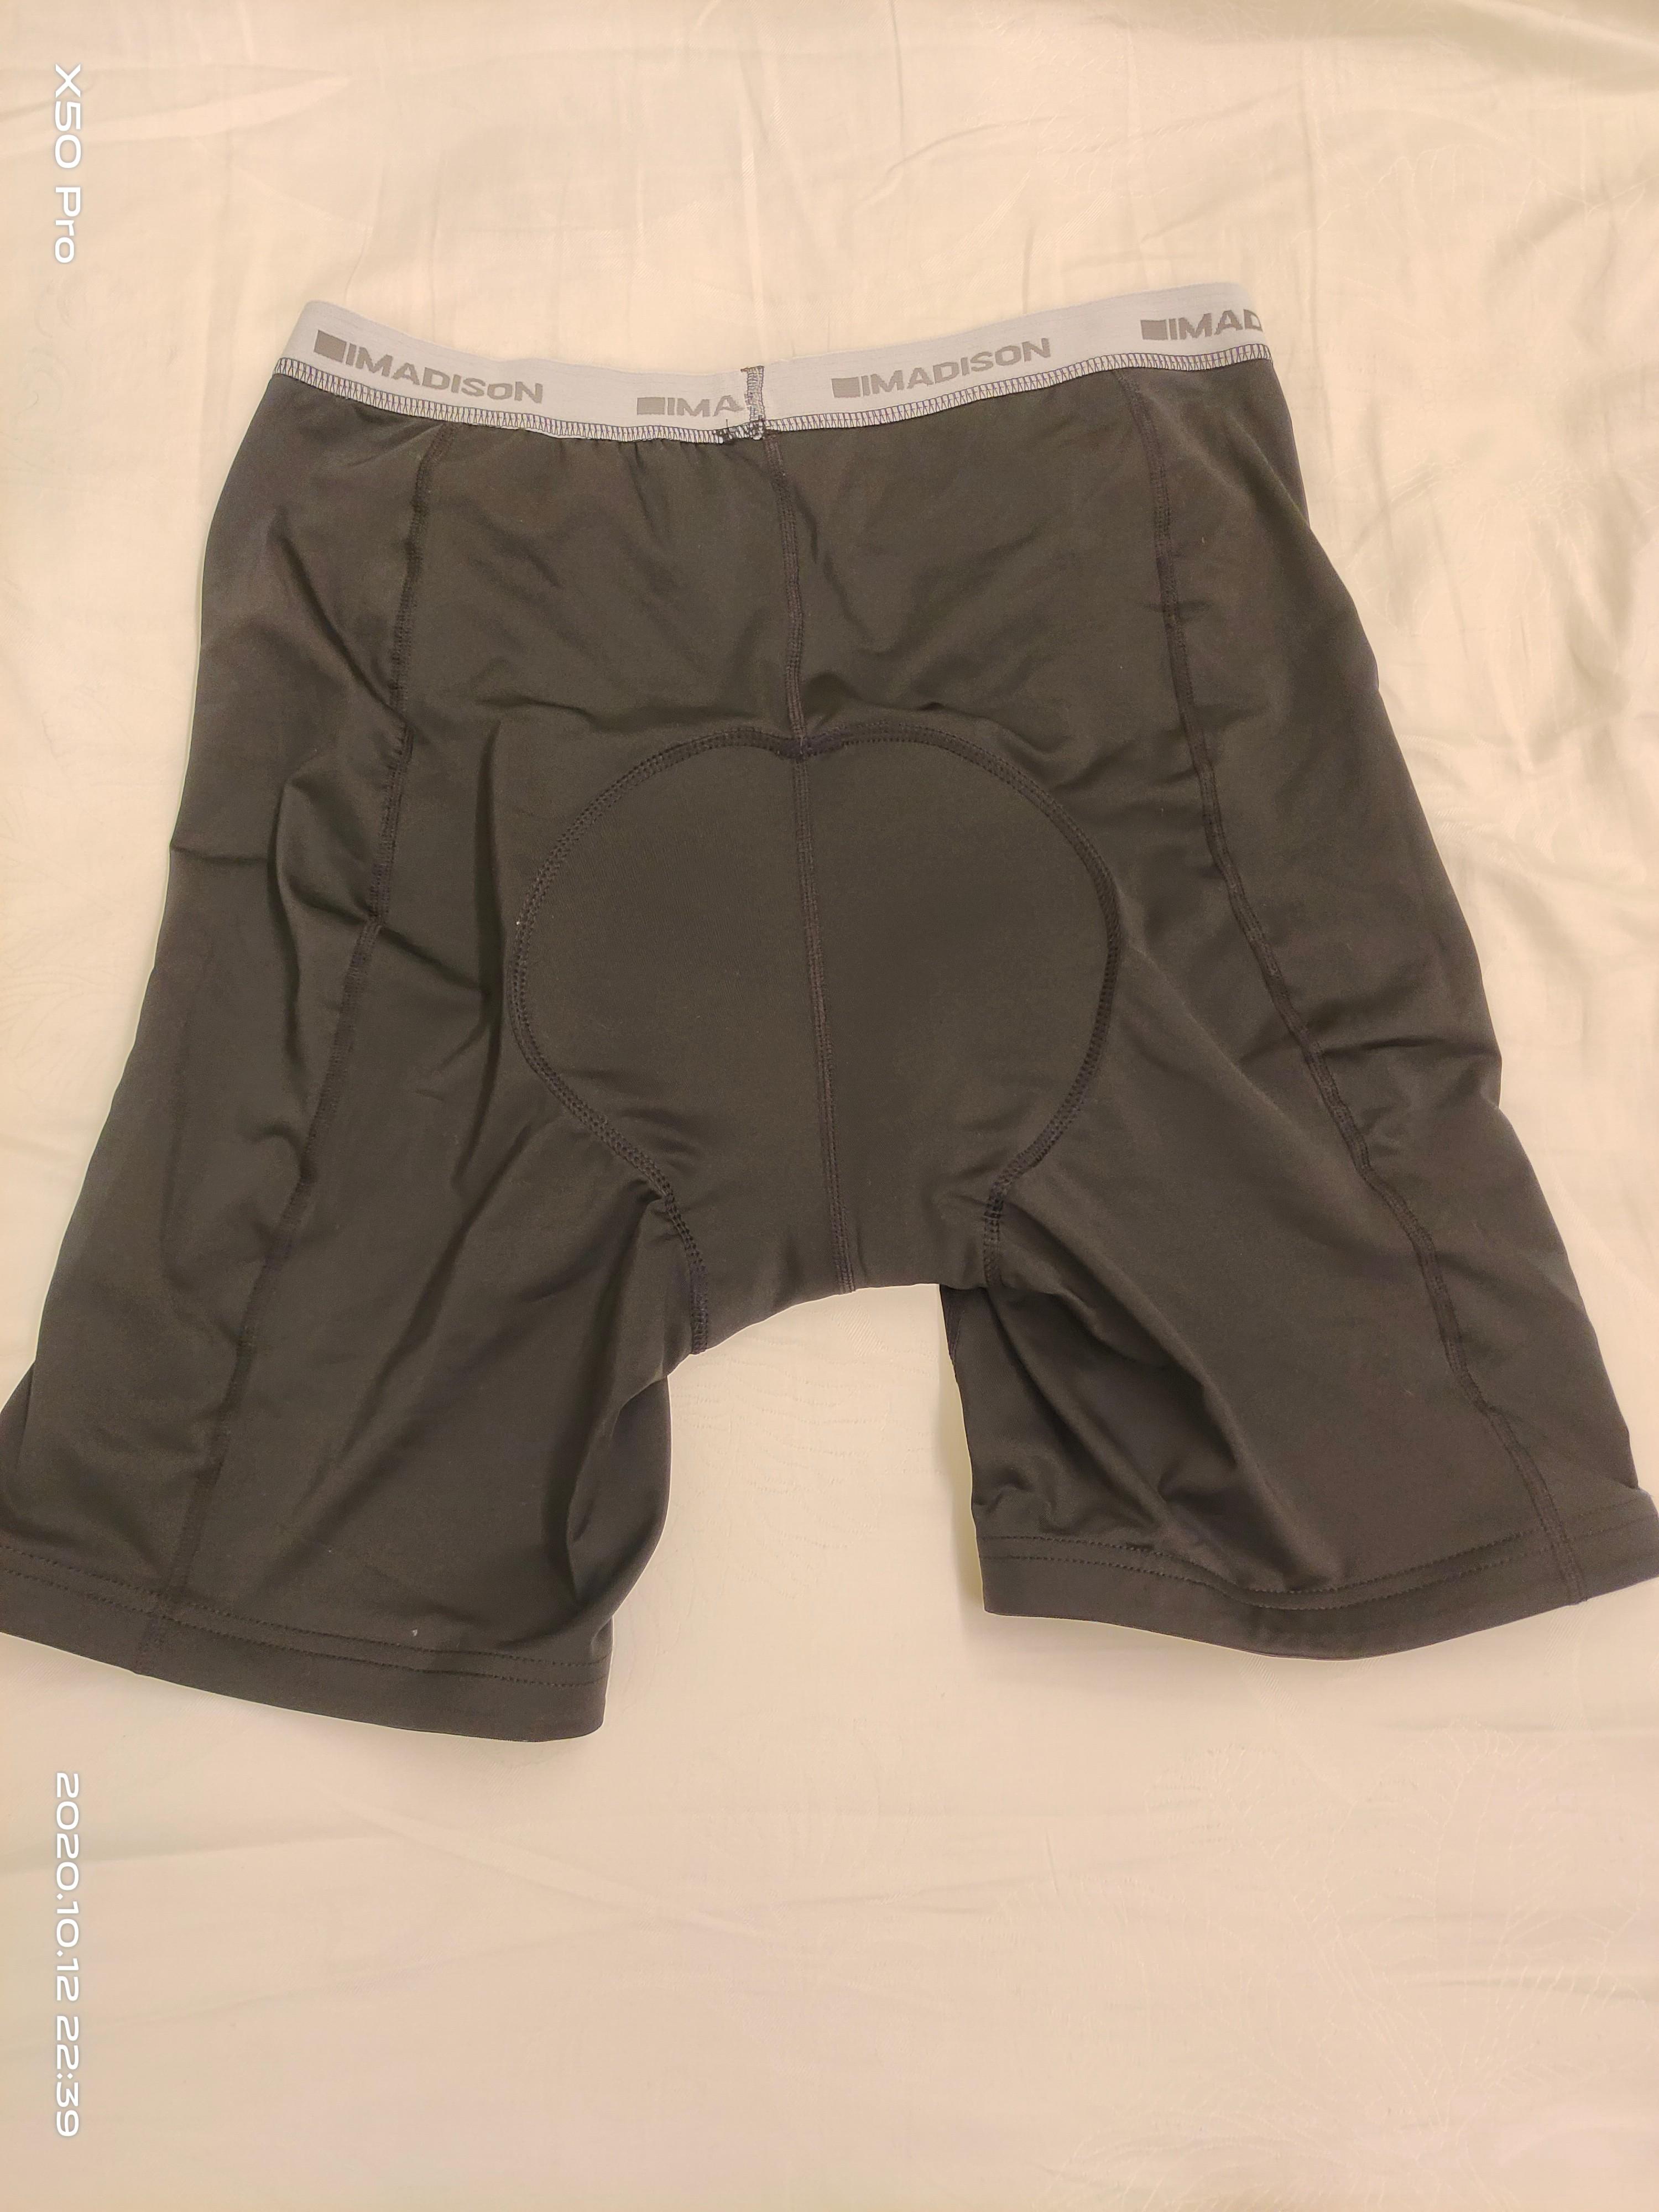 madison liner shorts